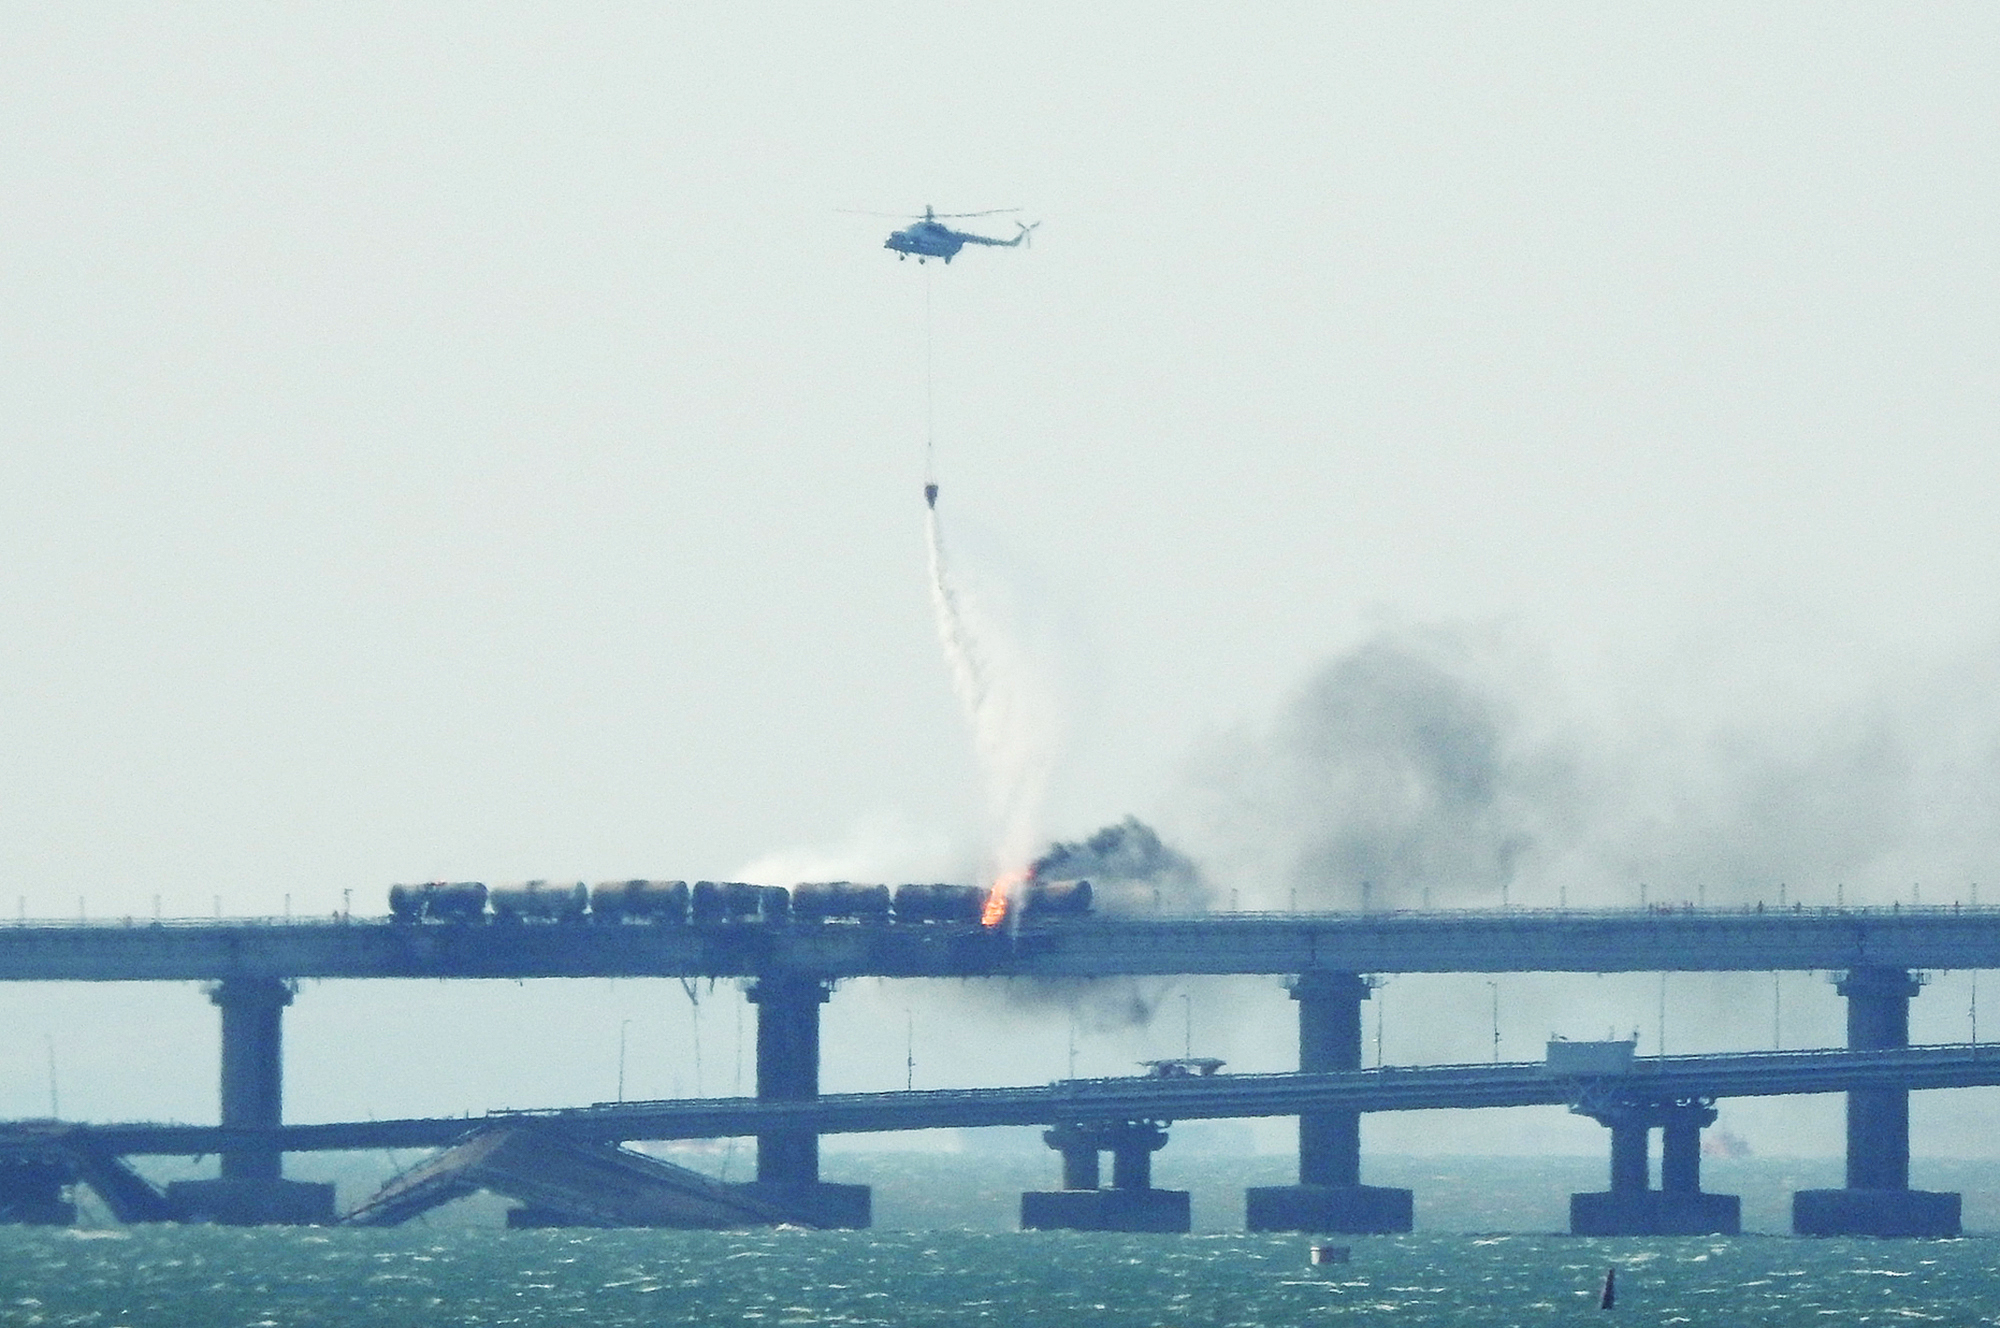 crimea rocked by explosions as bridge shut: reports